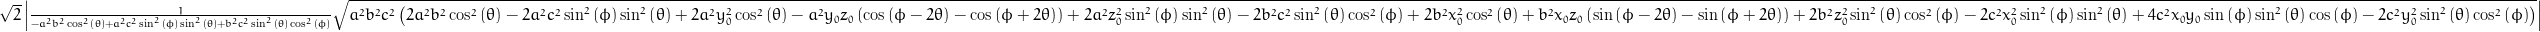 \sqrt{2} \left\lvert{\frac{1}{- a^{2} b^{2} \cos^{2}{\left (\theta \right )} + a^{2} c^{2} \sin^{2}{\left (\phi \right )} \sin^{2}{\left (\theta \right )} + b^{2} c^{2} \sin^{2}{\left (\theta \right )} \cos^{2}{\left (\phi \right )}} \sqrt{a^{2} b^{2} c^{2} \left(2 a^{2} b^{2} \cos^{2}{\left (\theta \right )} - 2 a^{2} c^{2} \sin^{2}{\left (\phi \right )} \sin^{2}{\left (\theta \right )} + 2 a^{2} y_{0}^{2} \cos^{2}{\left (\theta \right )} - a^{2} y_{0} z_{0} \left(\cos{\left (\phi - 2 \theta \right )} - \cos{\left (\phi + 2 \theta \right )}\right) + 2 a^{2} z_{0}^{2} \sin^{2}{\left (\phi \right )} \sin^{2}{\left (\theta \right )} - 2 b^{2} c^{2} \sin^{2}{\left (\theta \right )} \cos^{2}{\left (\phi \right )} + 2 b^{2} x_{0}^{2} \cos^{2}{\left (\theta \right )} + b^{2} x_{0} z_{0} \left(\sin{\left (\phi - 2 \theta \right )} - \sin{\left (\phi + 2 \theta \right )}\right) + 2 b^{2} z_{0}^{2} \sin^{2}{\left (\theta \right )} \cos^{2}{\left (\phi \right )} - 2 c^{2} x_{0}^{2} \sin^{2}{\left (\phi \right )} \sin^{2}{\left (\theta \right )} + 4 c^{2} x_{0} y_{0} \sin{\left (\phi \right )} \sin^{2}{\left (\theta \right )} \cos{\left (\phi \right )} - 2 c^{2} y_{0}^{2} \sin^{2}{\left (\theta \right )} \cos^{2}{\left (\phi \right )}\right)}}\right\rvert